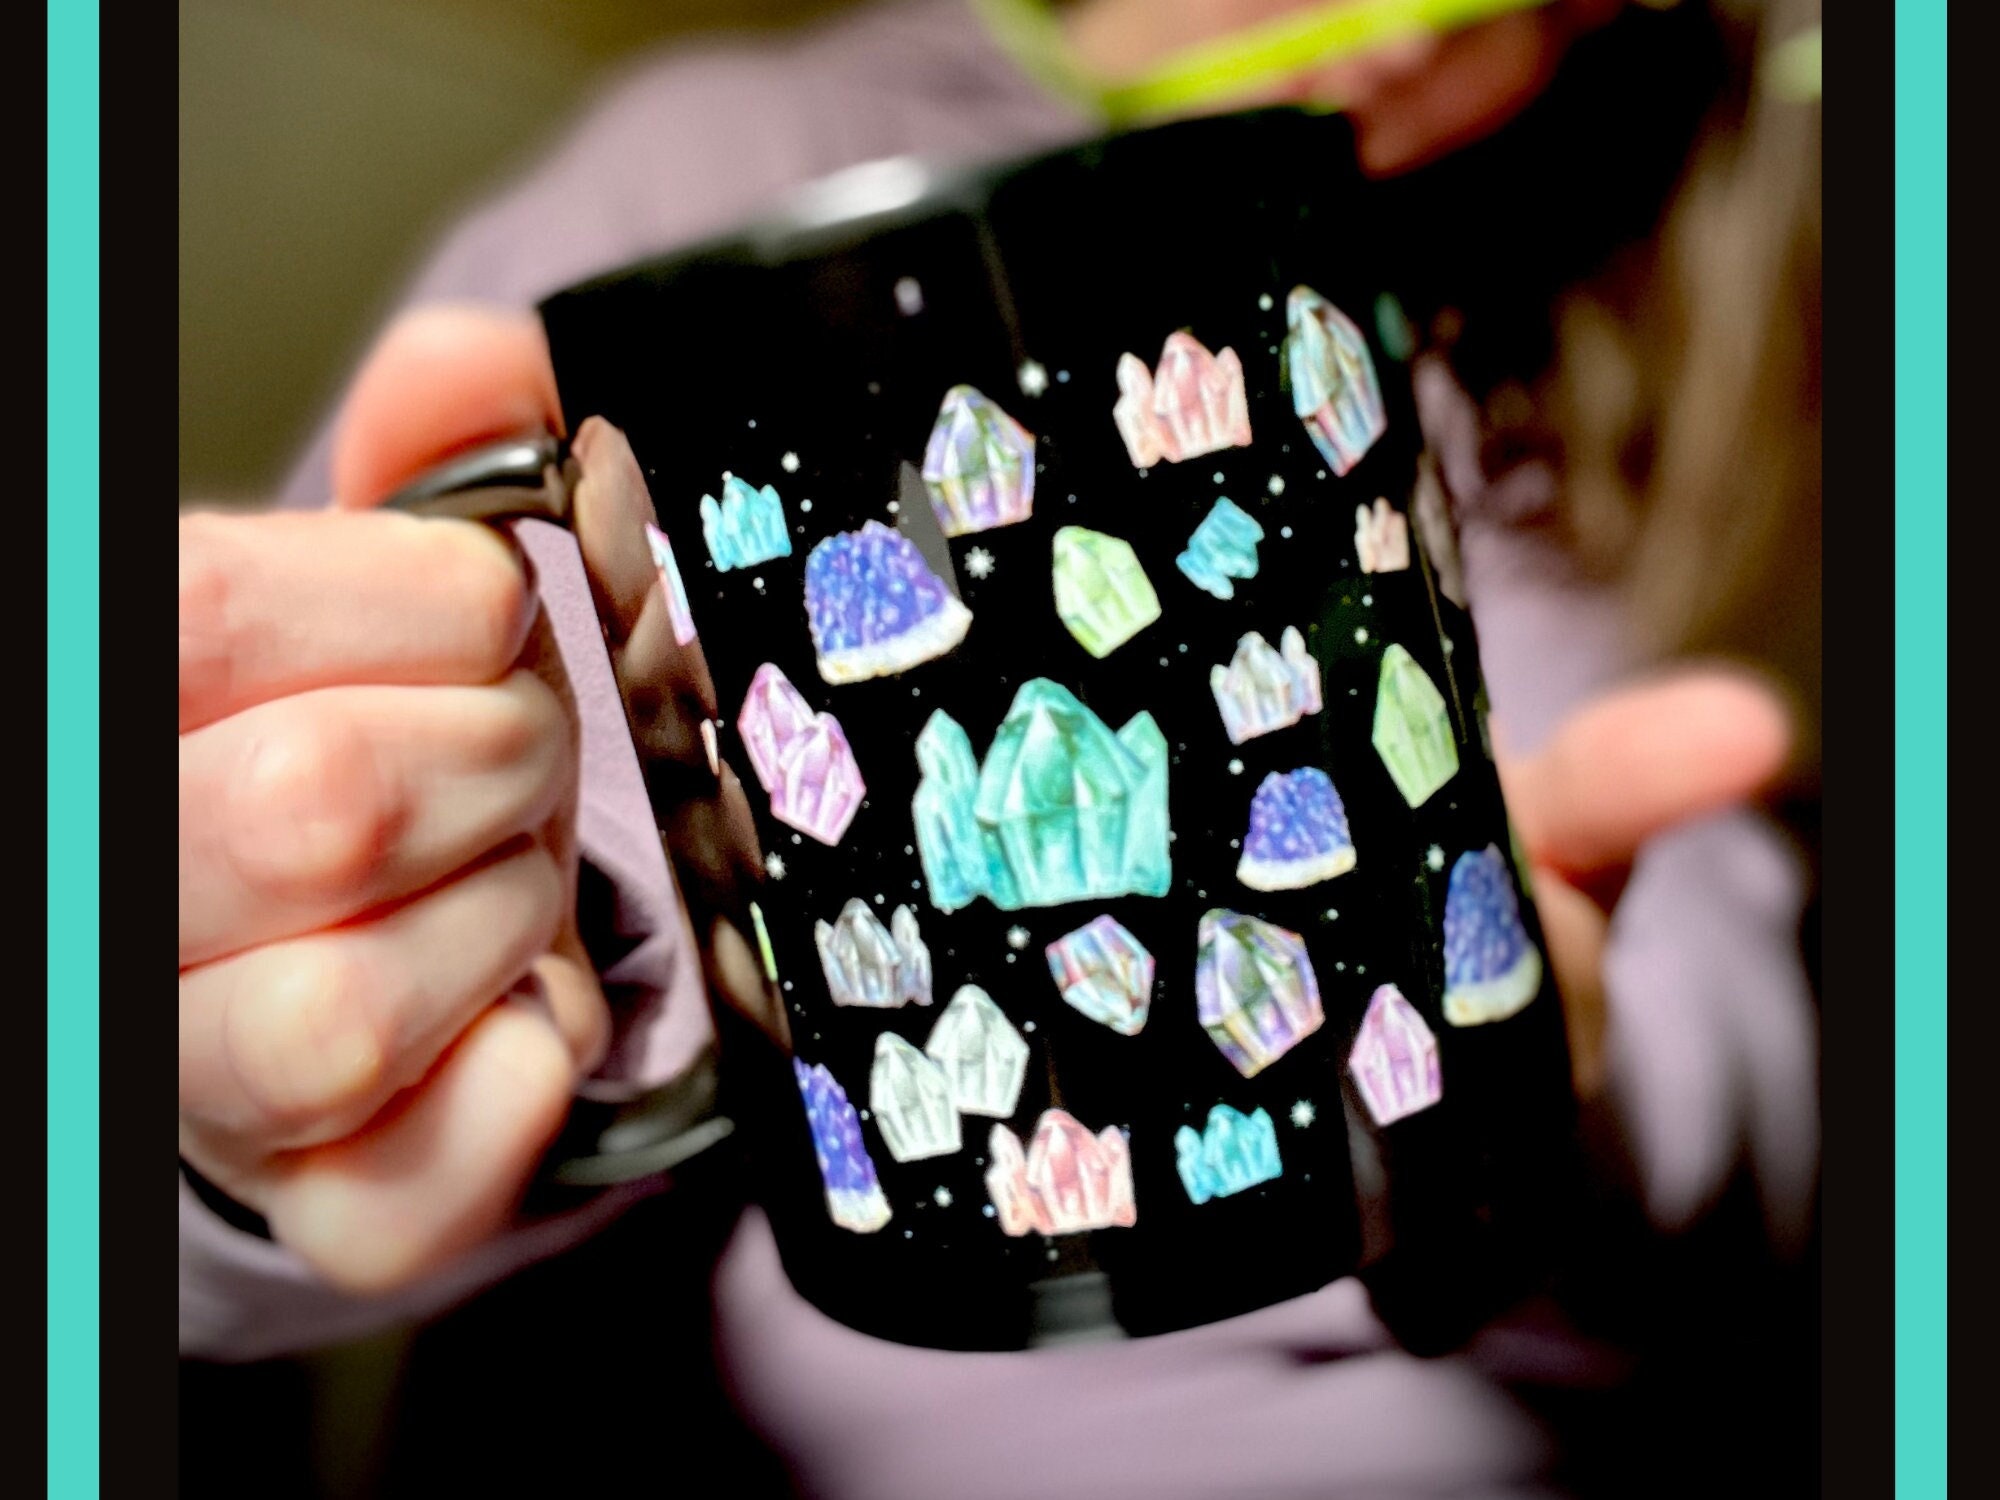 CRYSTAL DREAMS GEODE Mug, Quartz Coffee Cup, Tea Mug, Kaleidoscope Colors  Design, Coffee Mug, Latte Mug, Glam Girl Mug, Hippie Boho Mug 